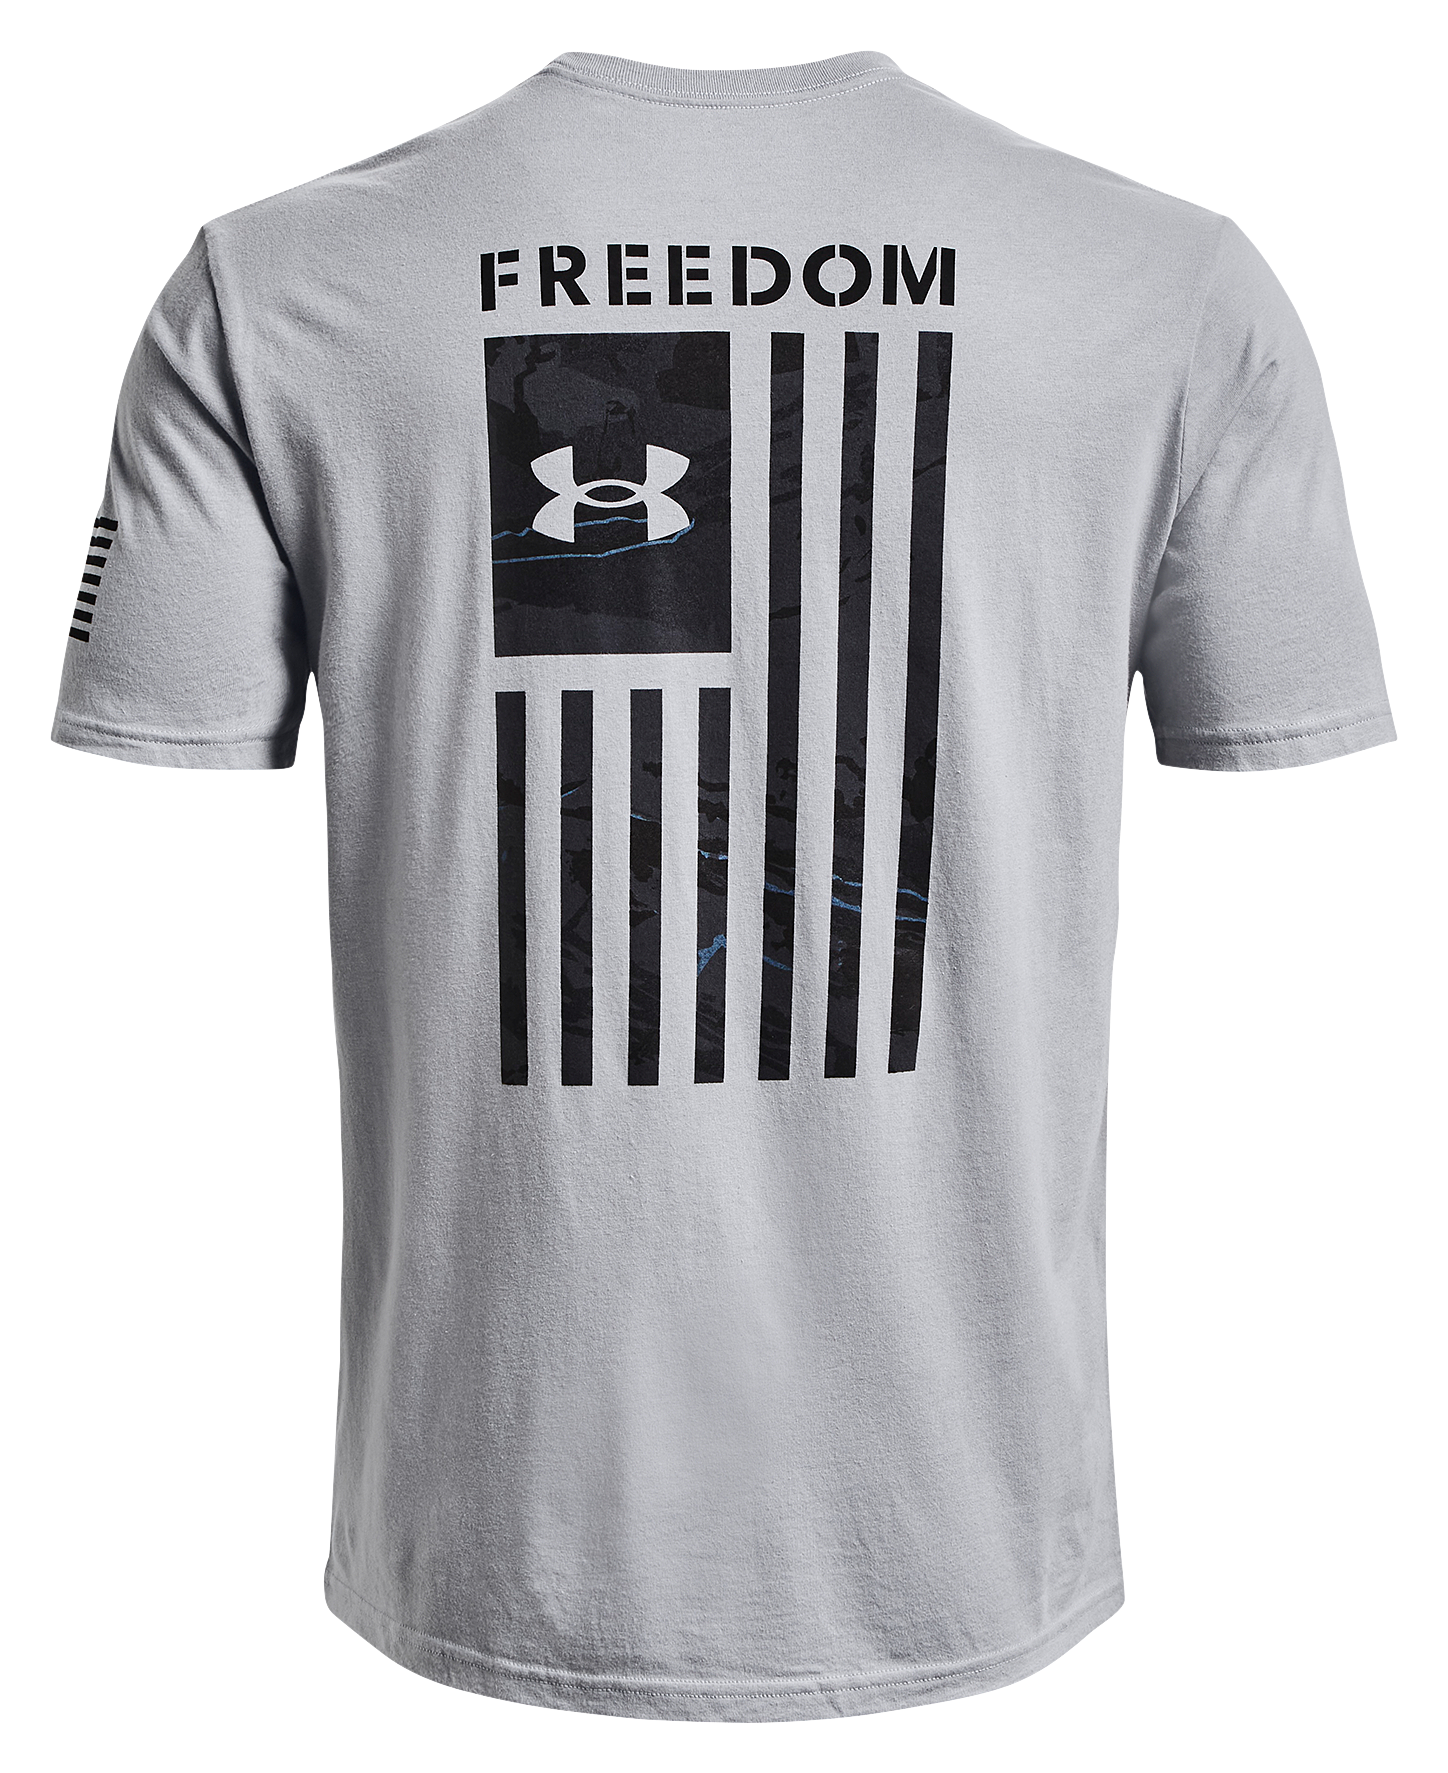 Under Armour Freedom Flag Short-Sleeve T-Shirt for Men - Steel/UA Blackout Camo - XL